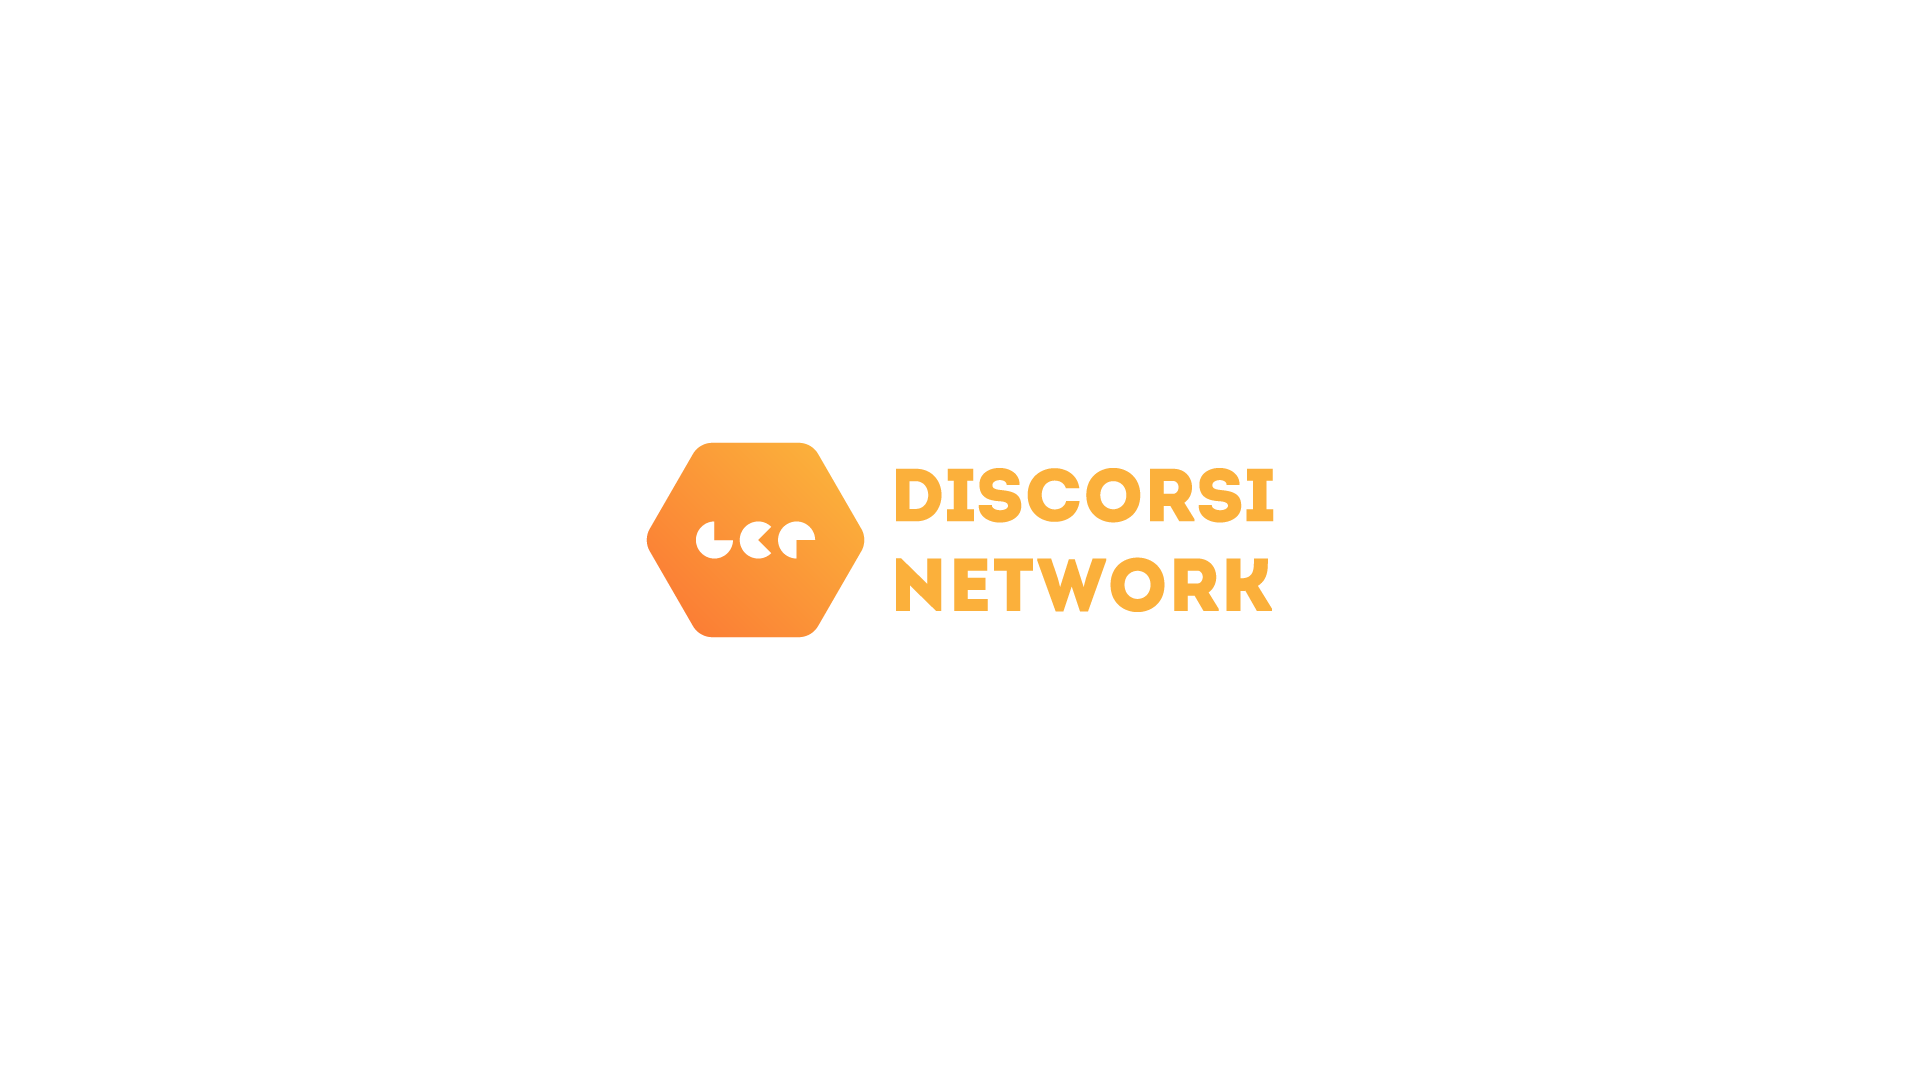 DISCORSI NETWORK LOGO-01